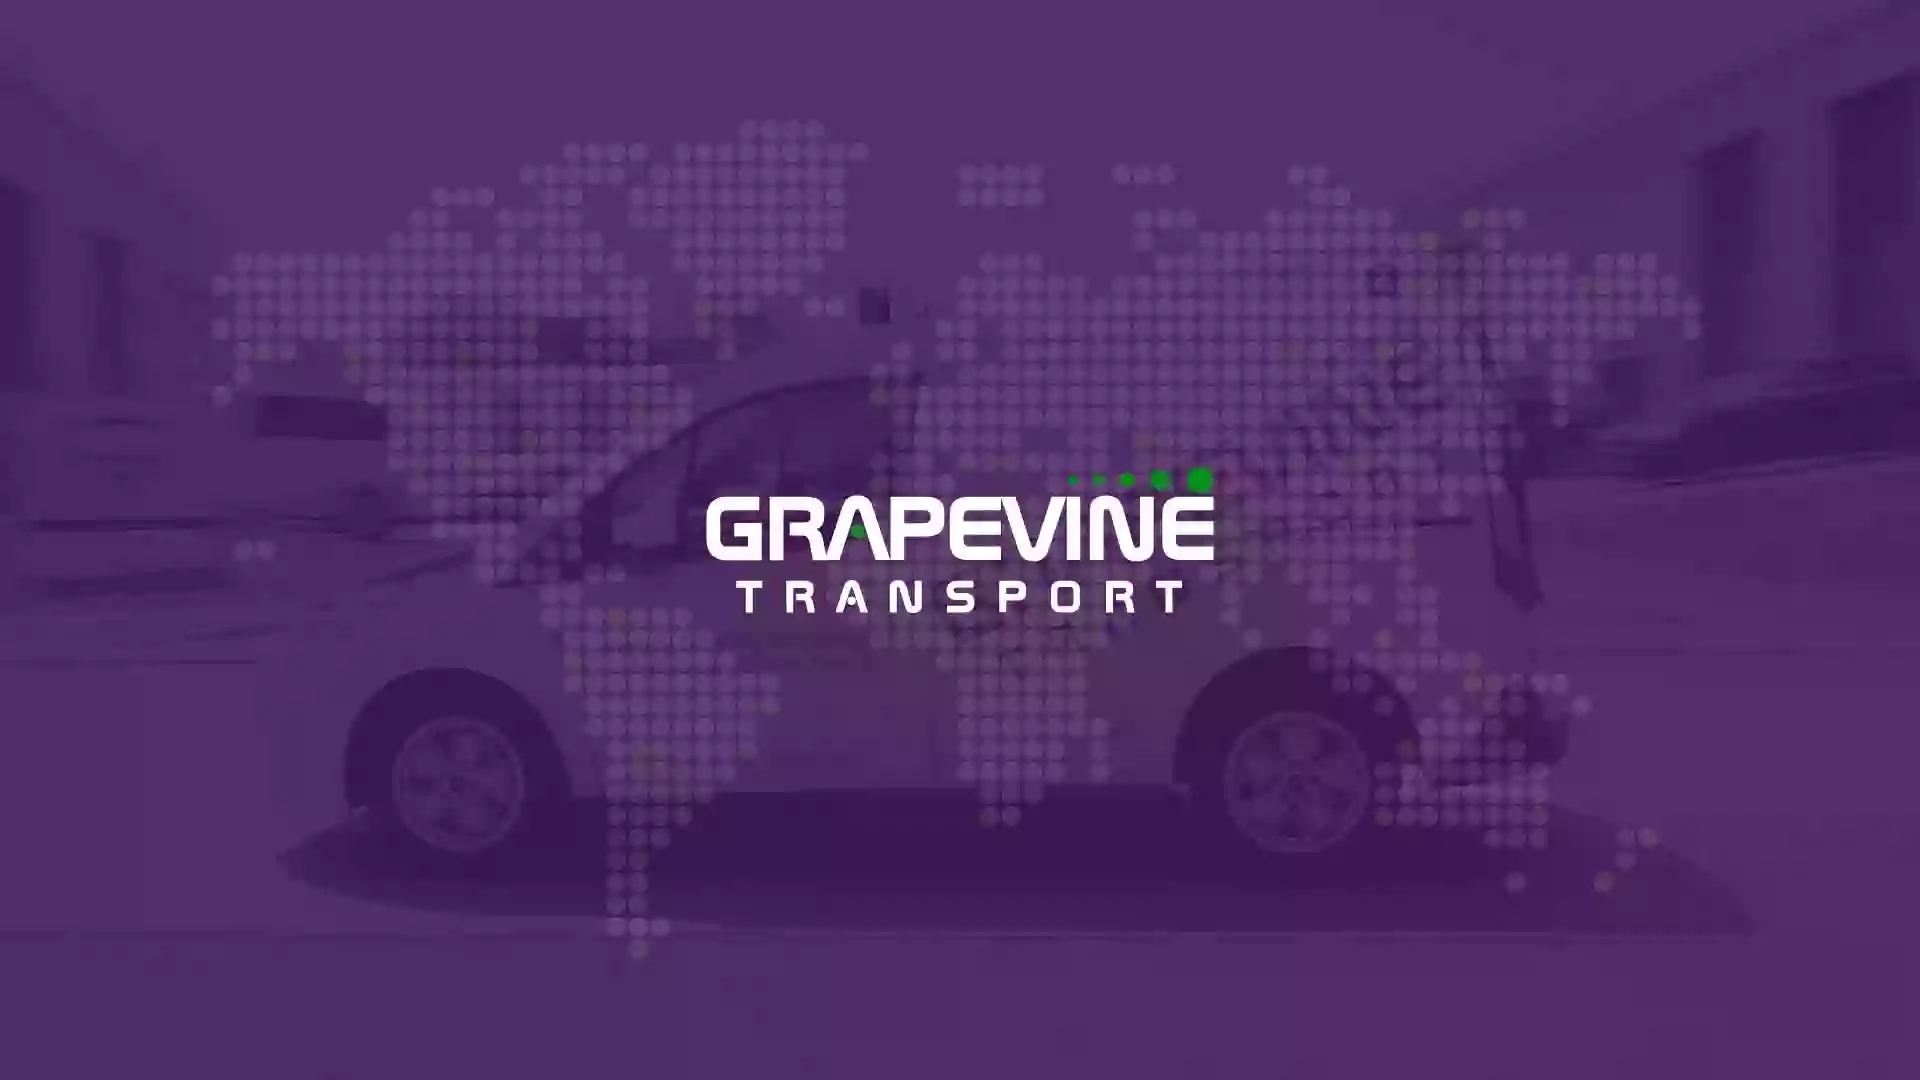 Grapevine (the transport company) Ltd